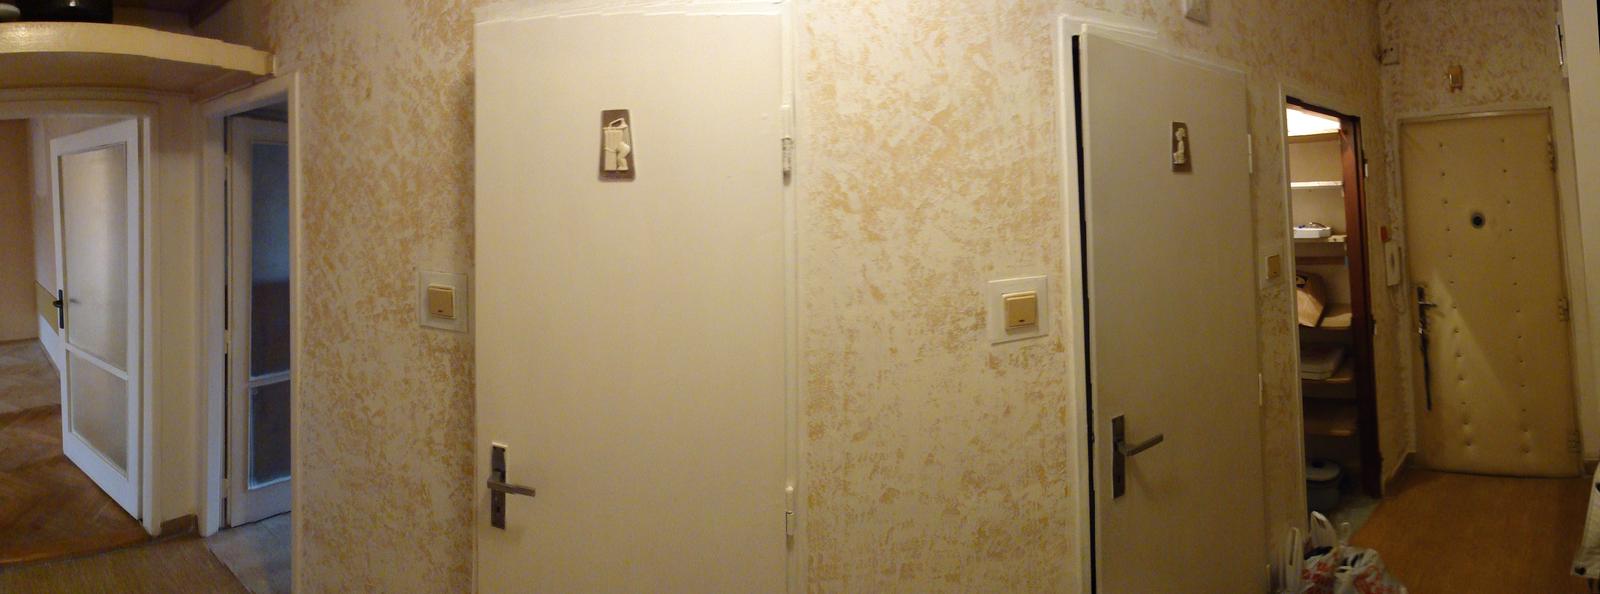 Rekonstrukce bytu 2+1 - Den 0 - chodba (zleva - dvere puvodni obyvak, dvere do kuchyne, koupelny, zachodu, komory a vchodove dvere)